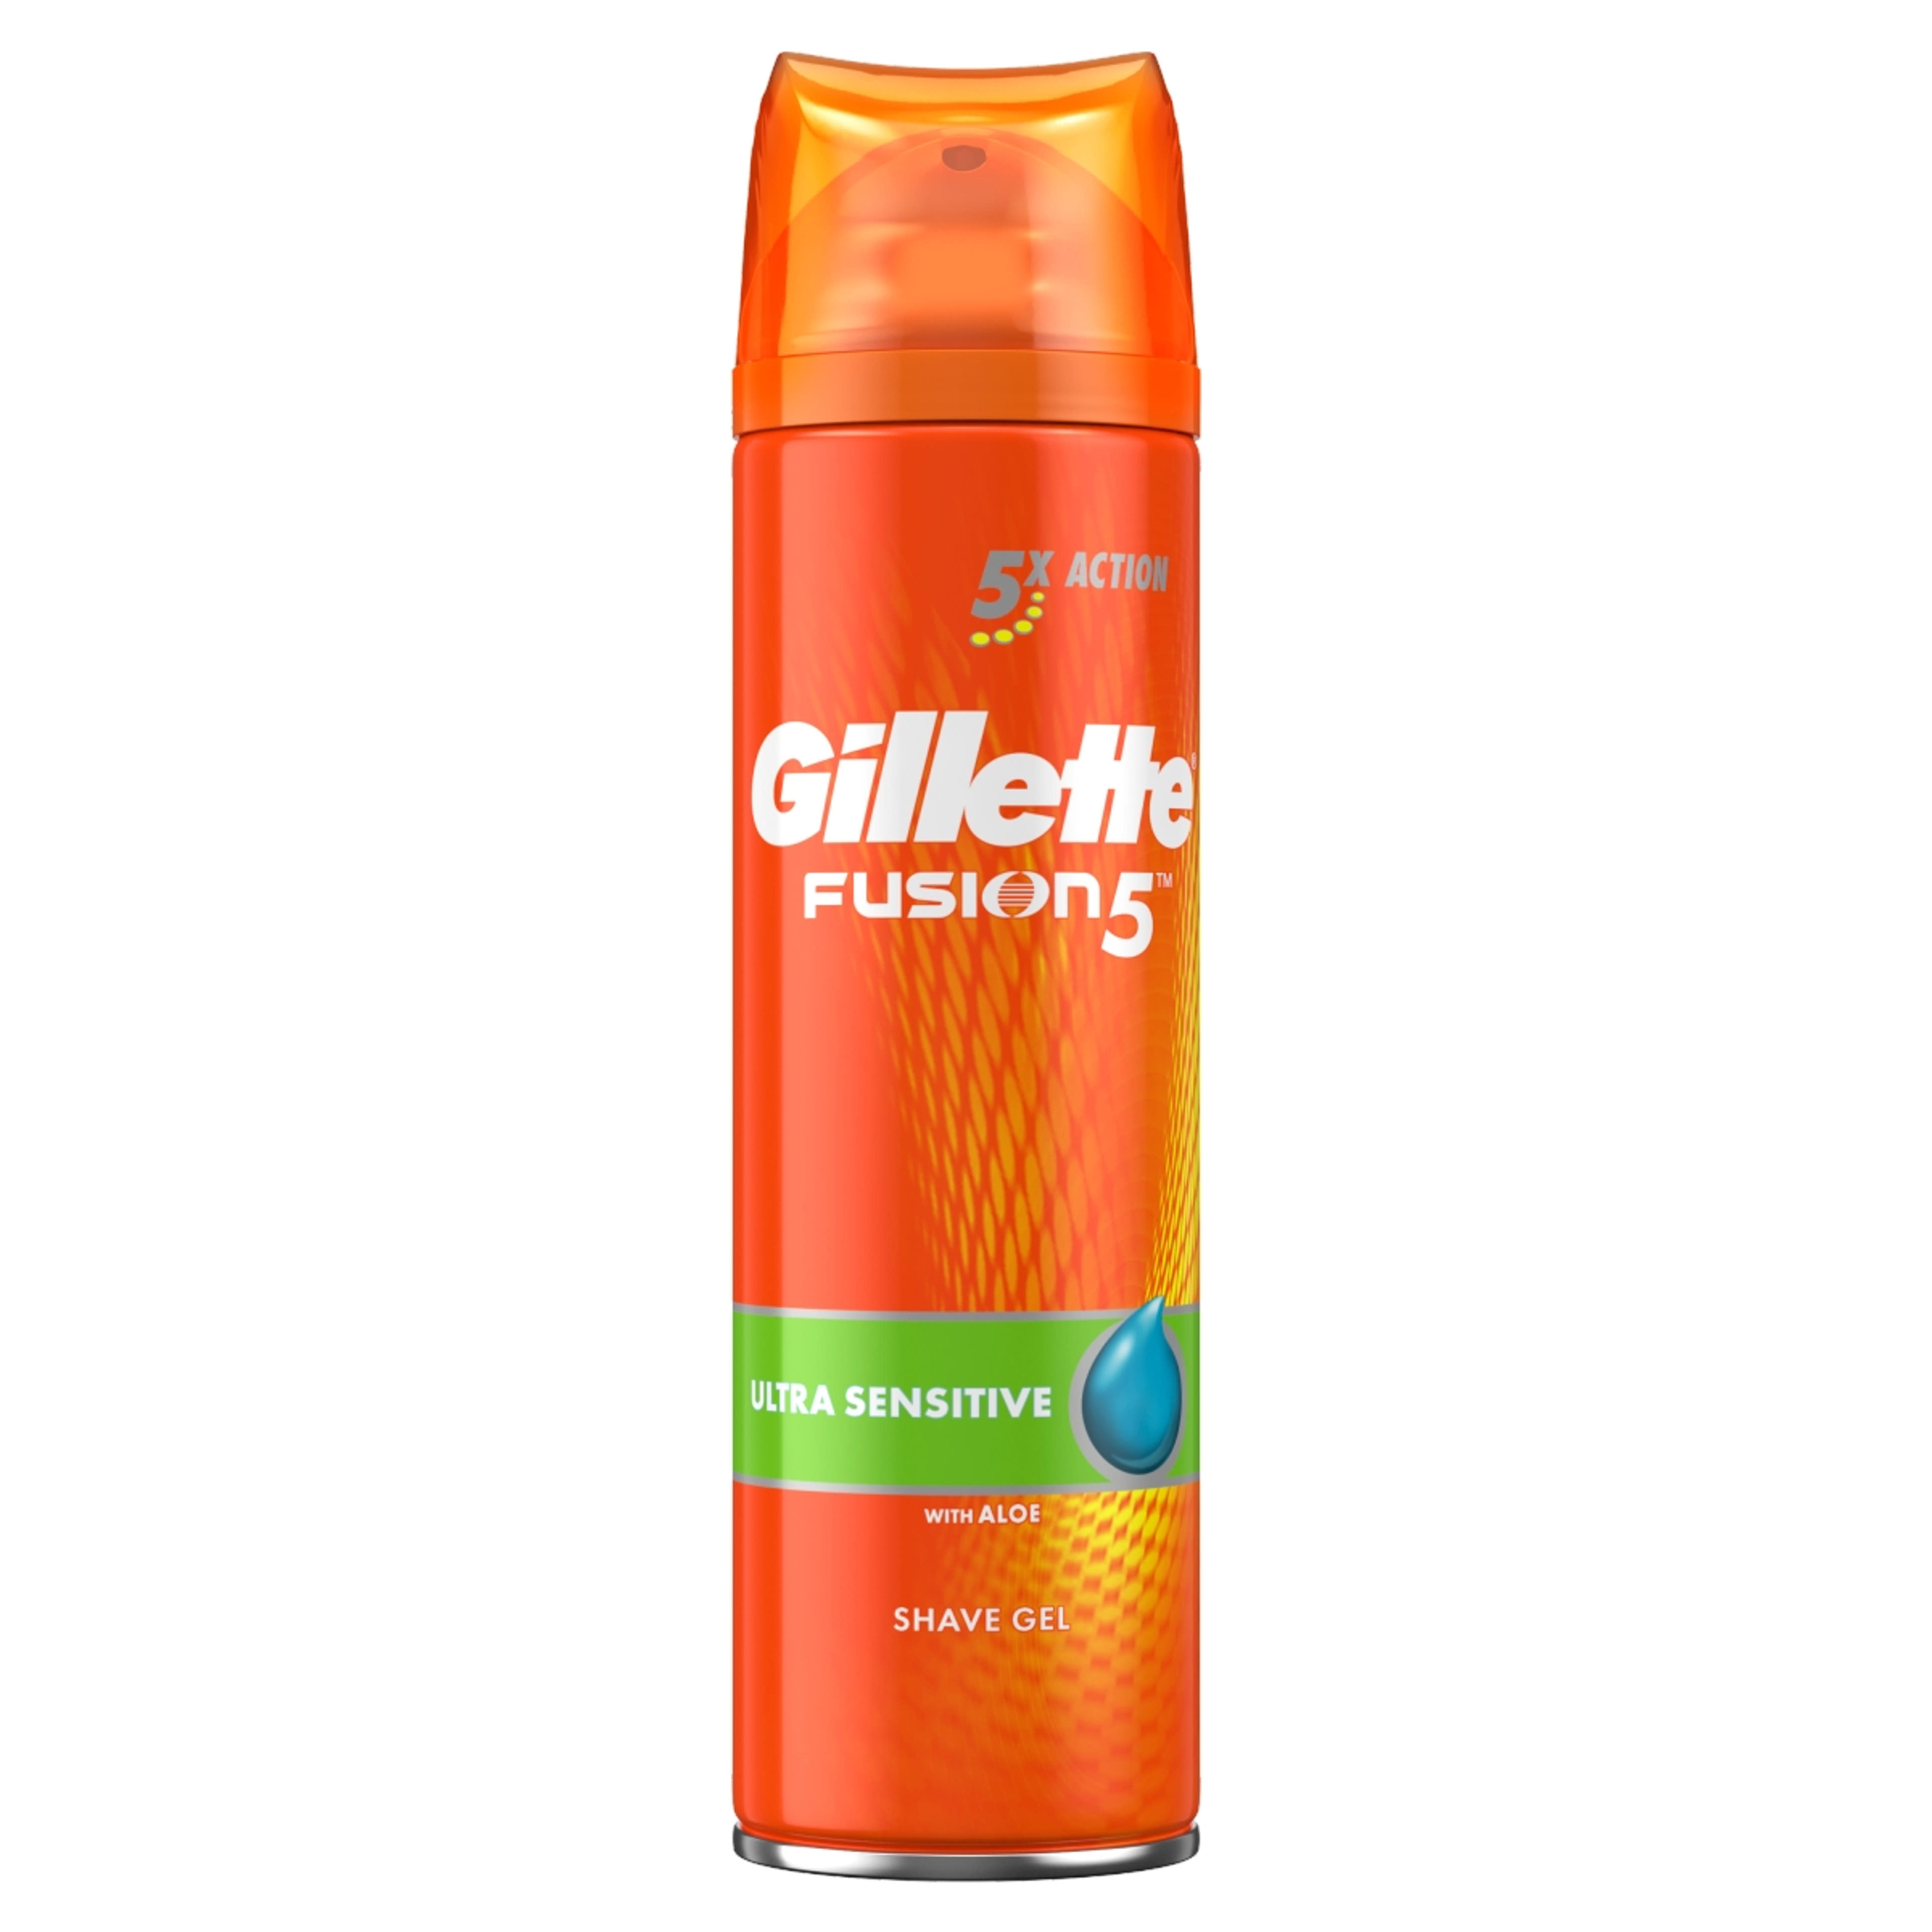 Gillette fusion5 ultra sensitive borotva gél - 200 ml-2